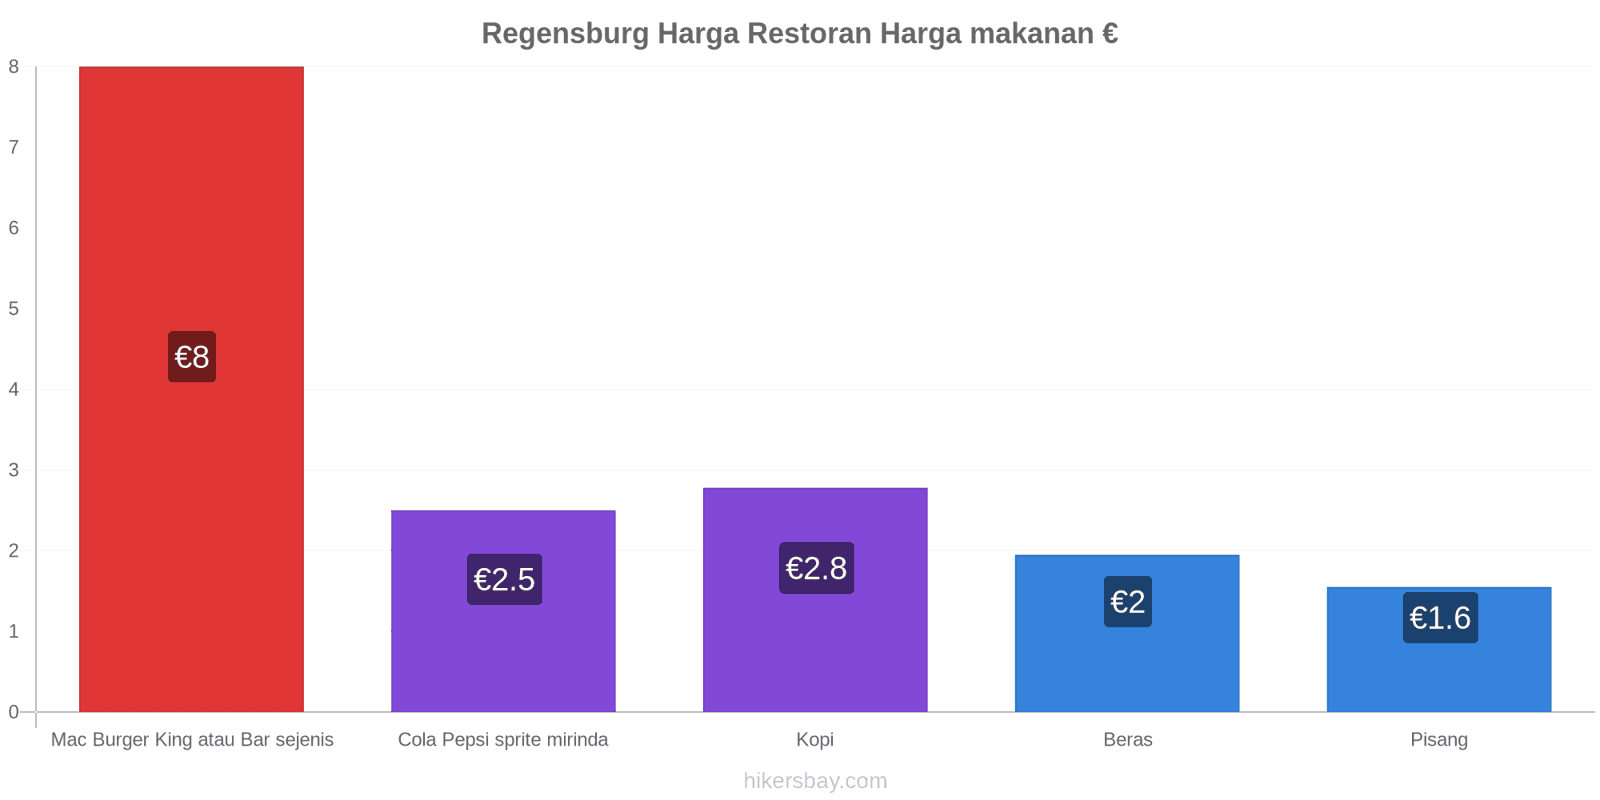 Regensburg perubahan harga hikersbay.com